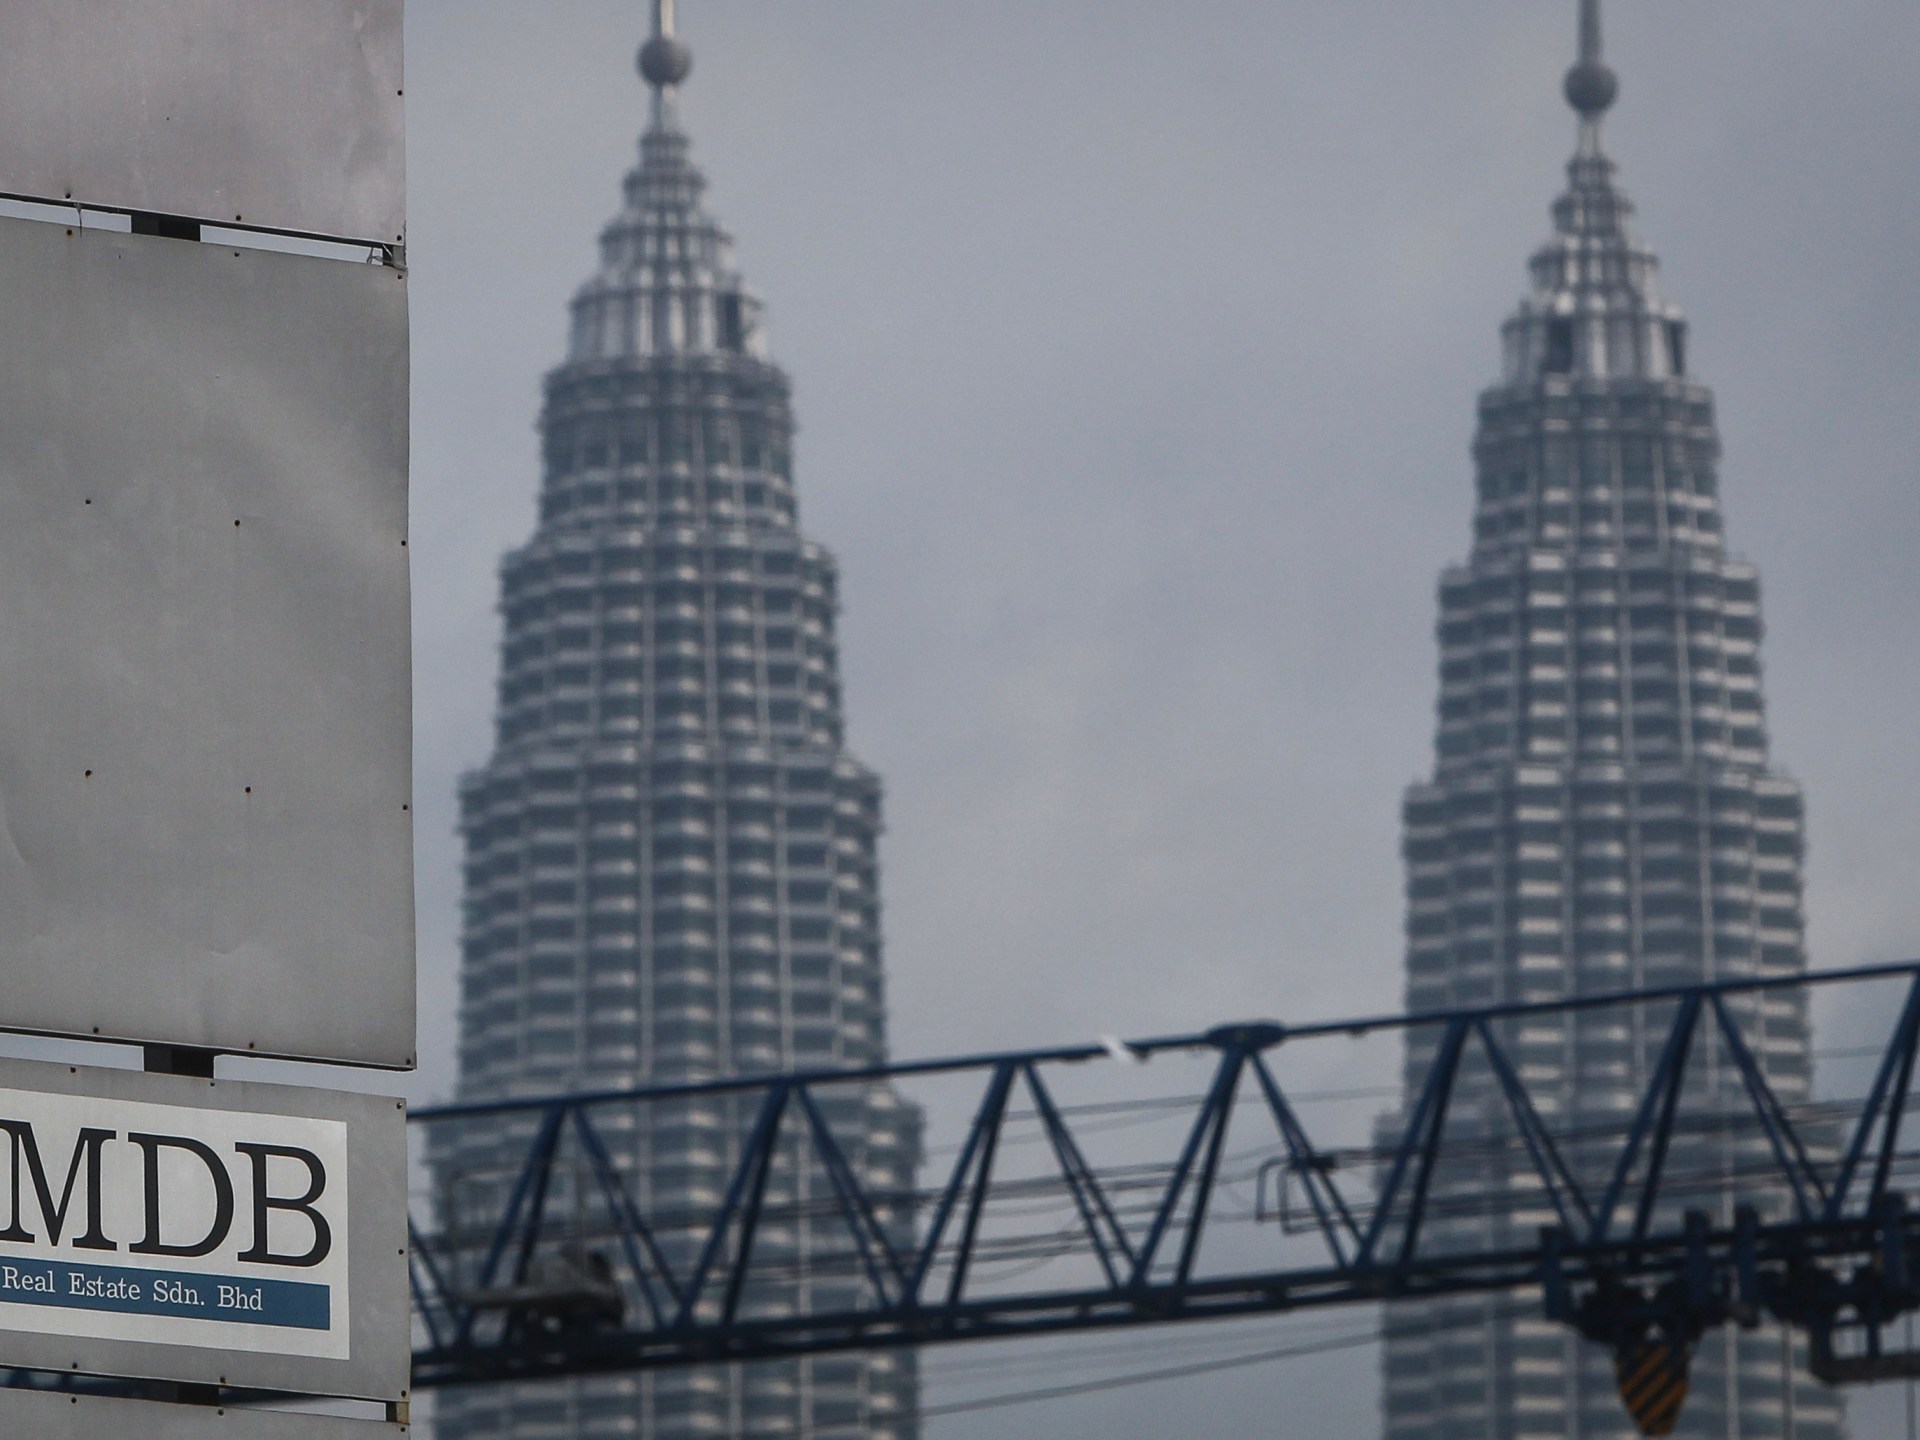 1MDB 嫌疑人和 Jho Low 同伙在接受讯问数周后死亡 | 腐败新闻